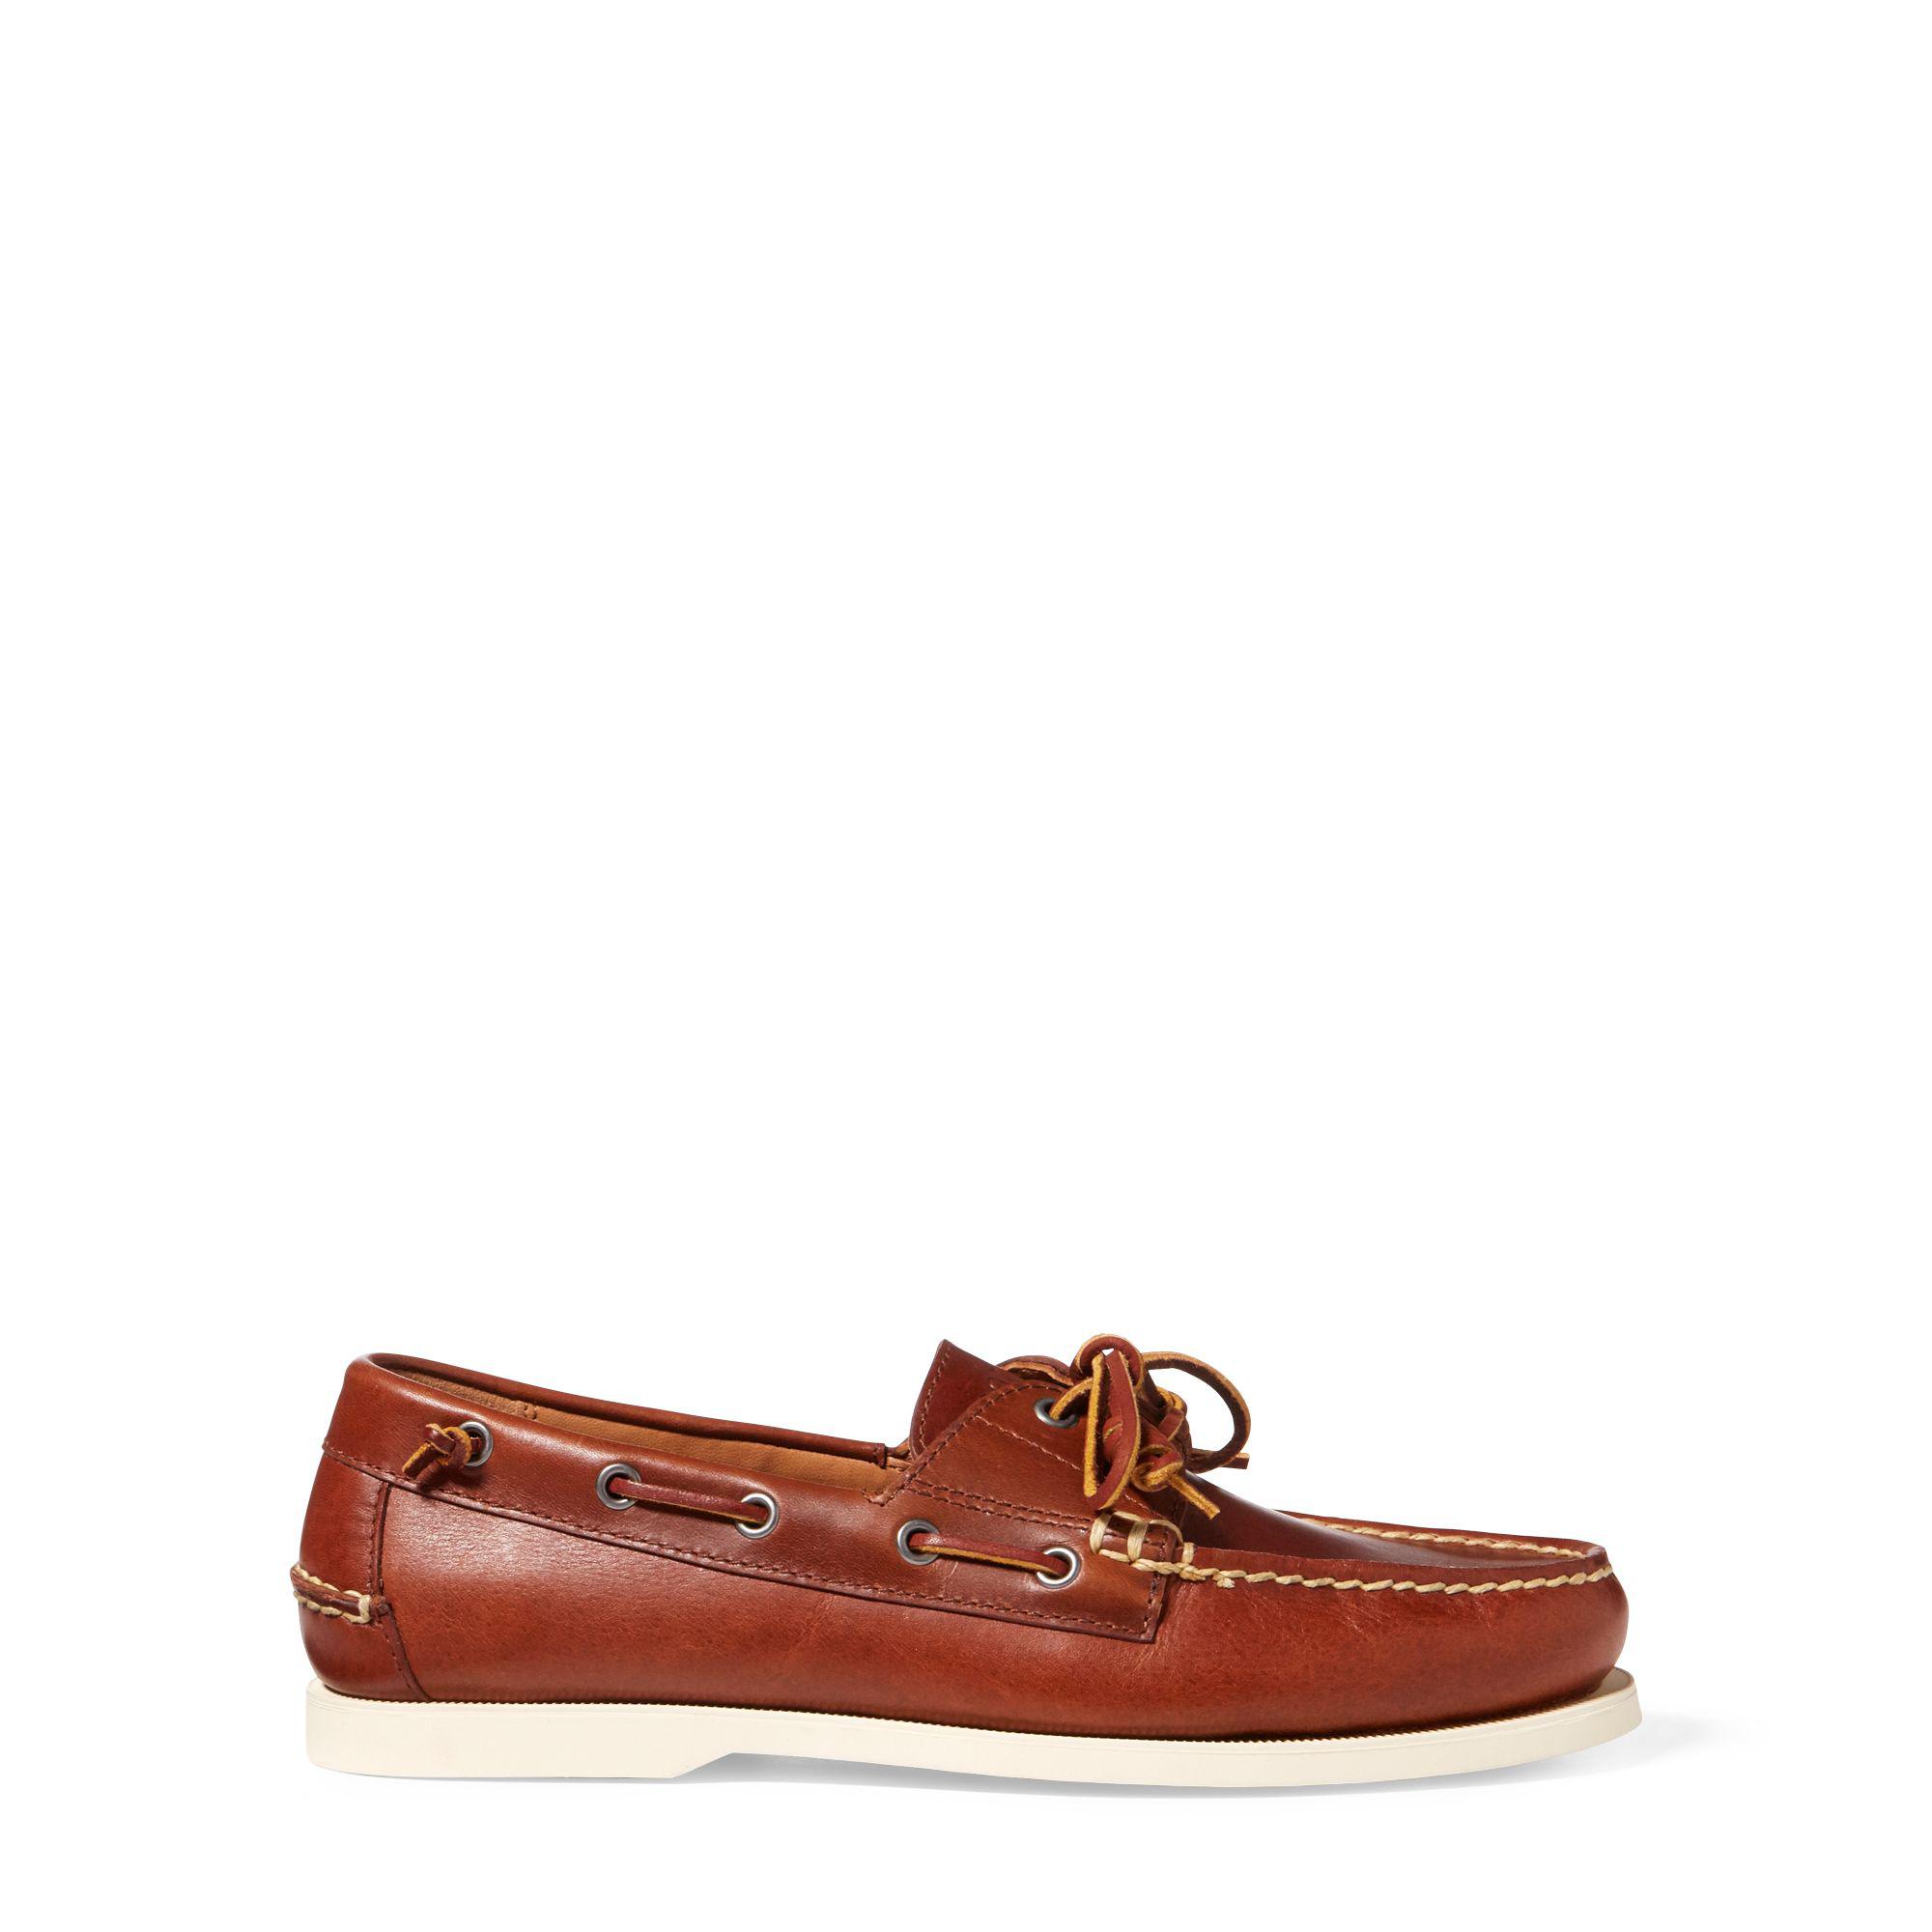 Polo Ralph Lauren Merton Leather Boat Shoe in Brown for Men - Lyst